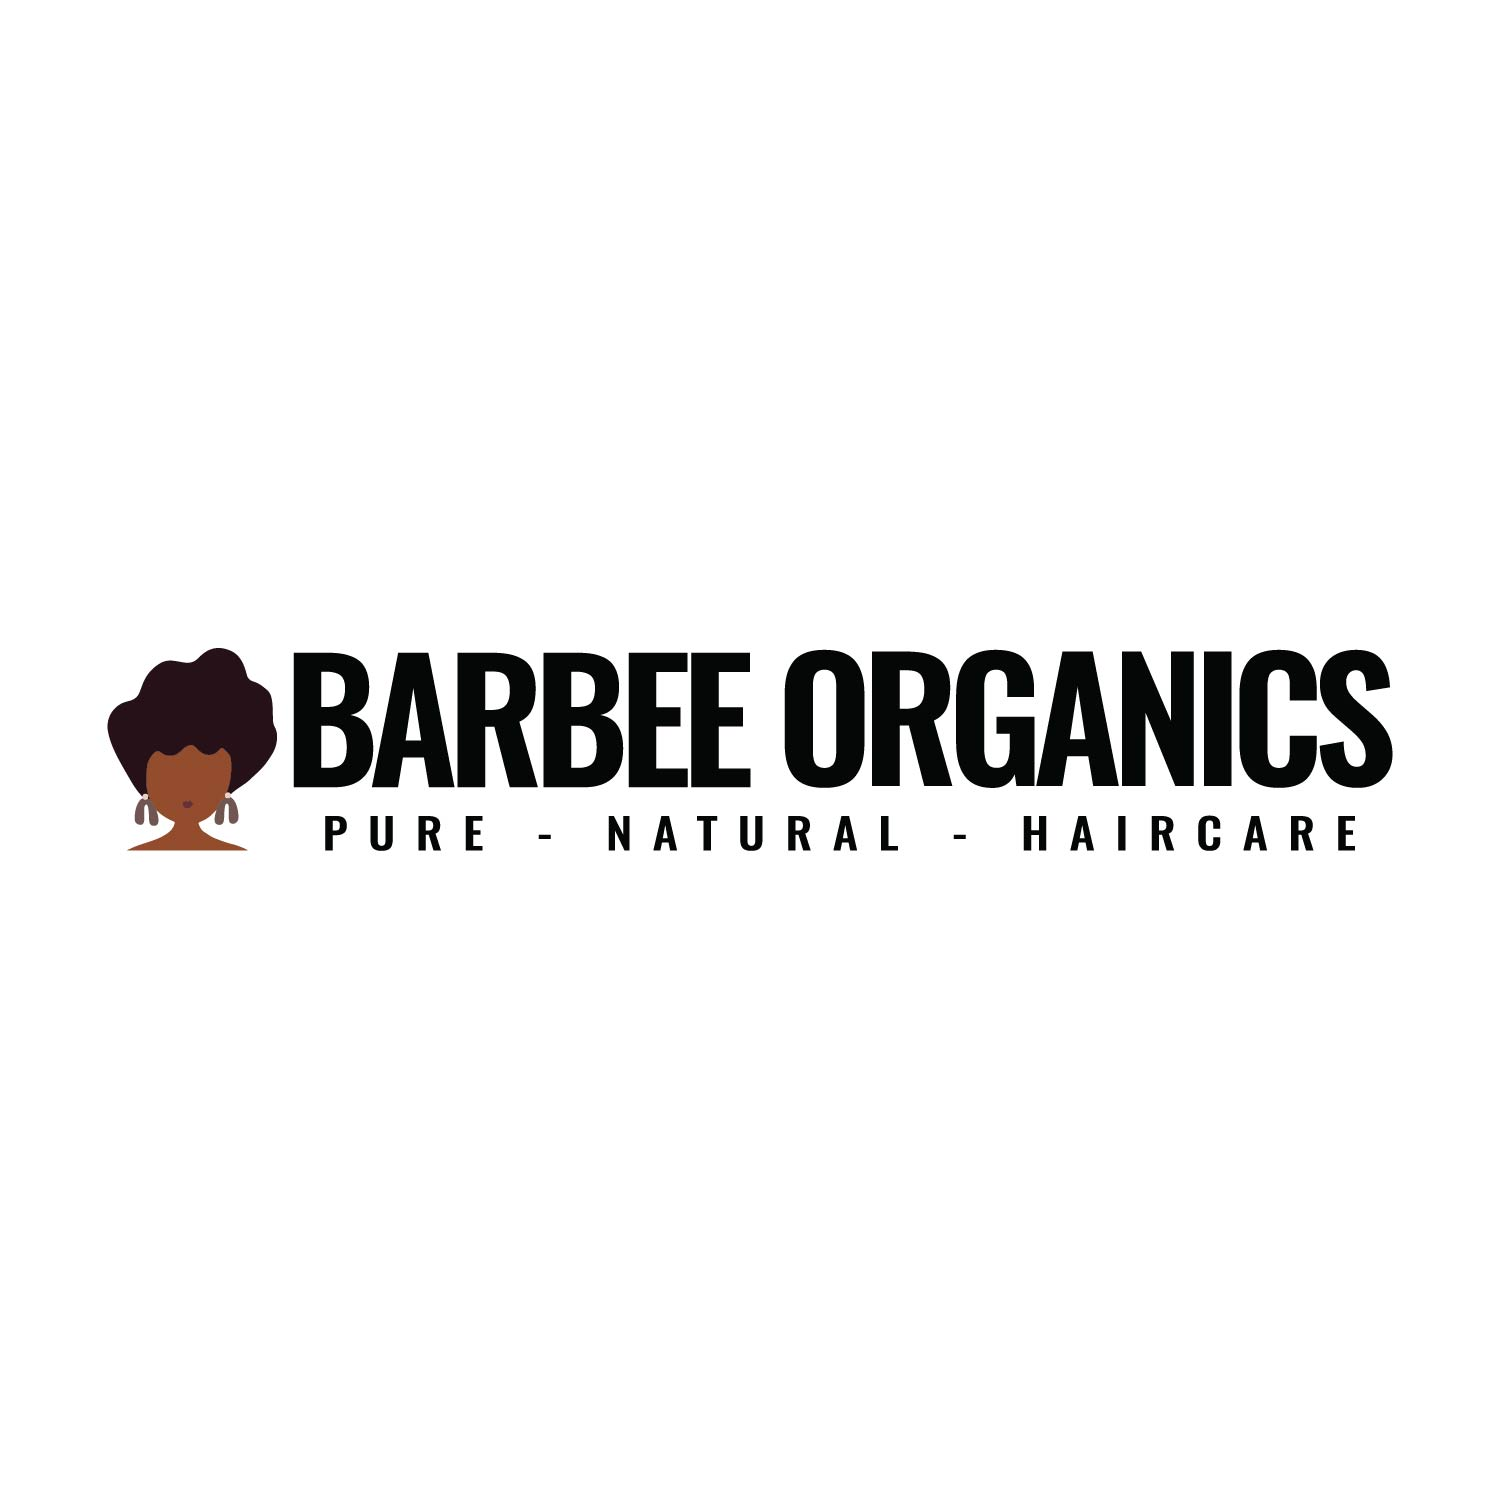 Barbee Organics